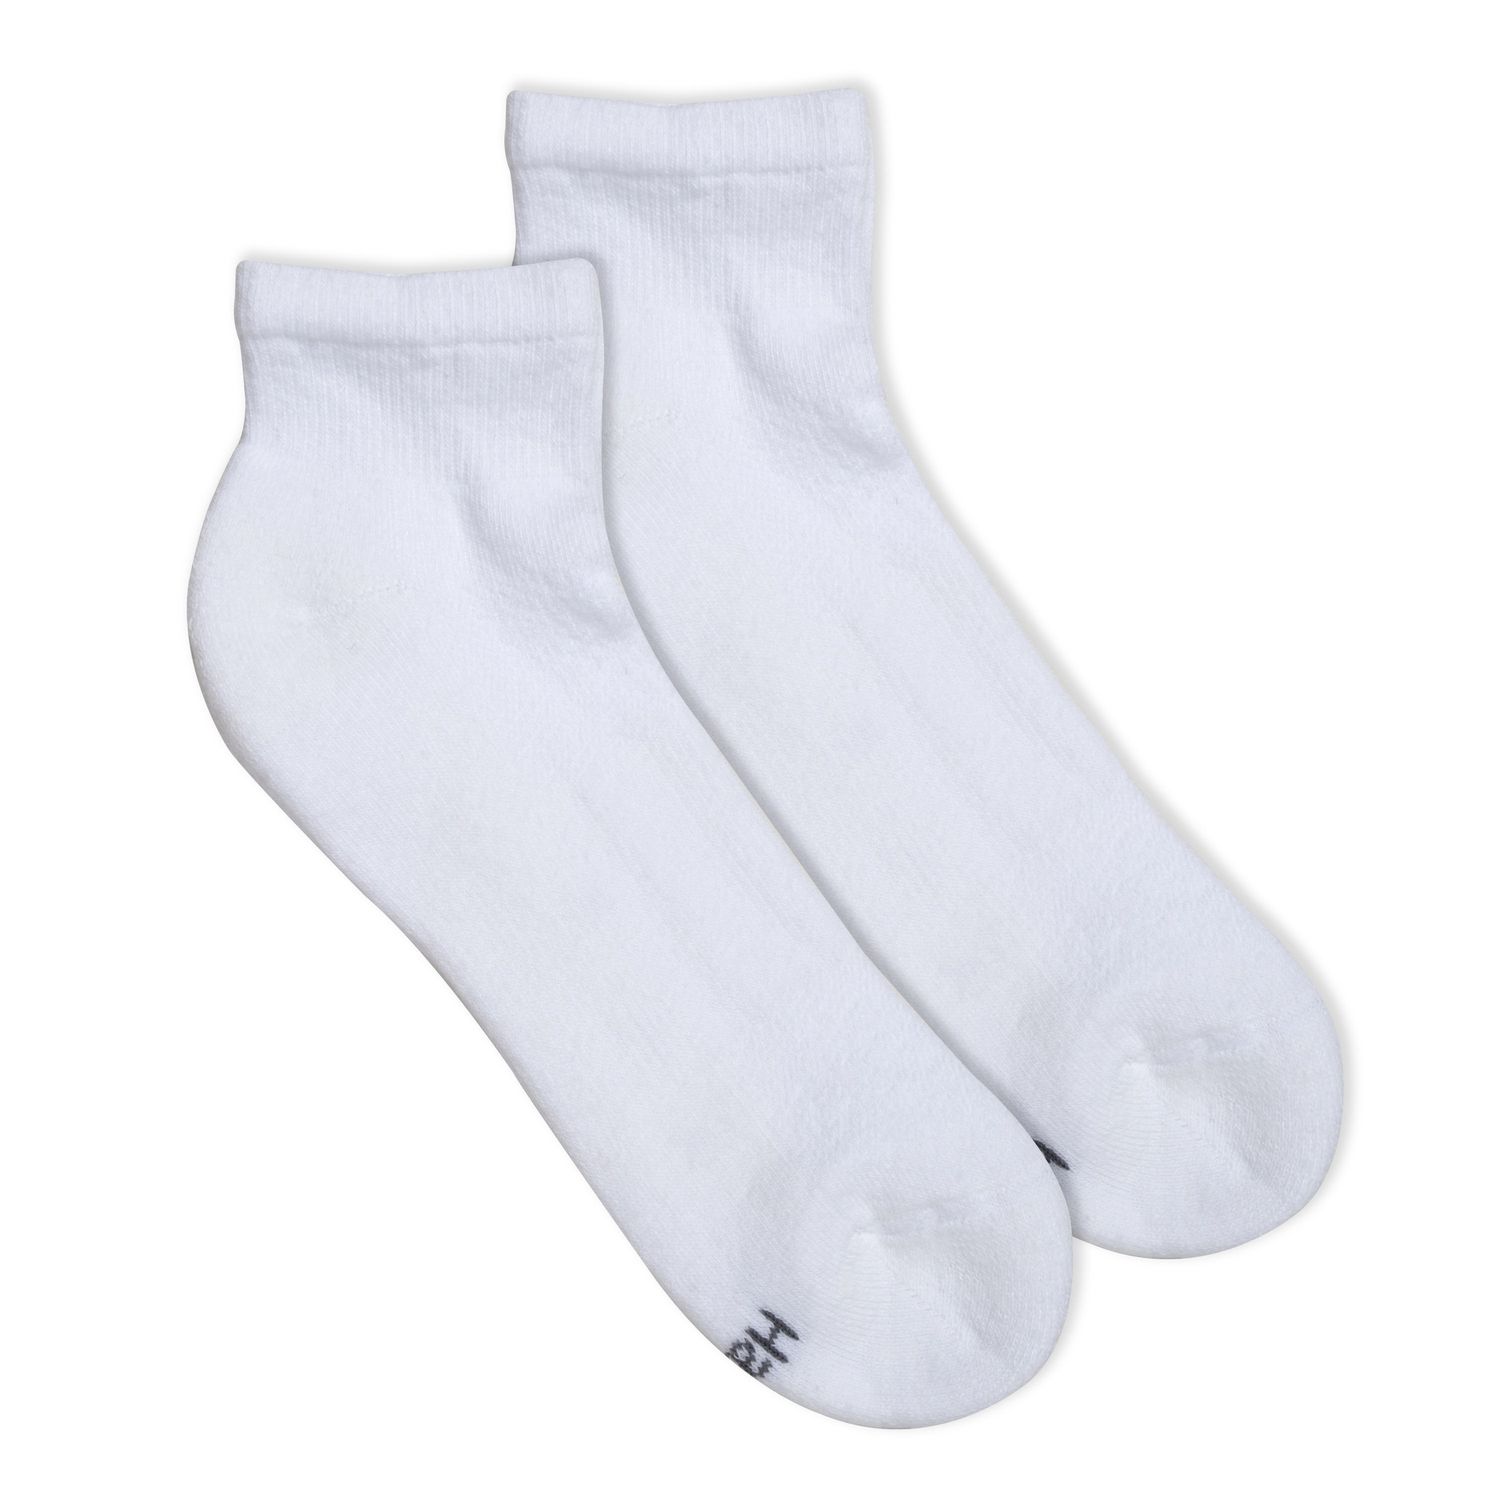 Hanes X Temp Mens Ankle Socks Pack Of 4 Walmart Canada